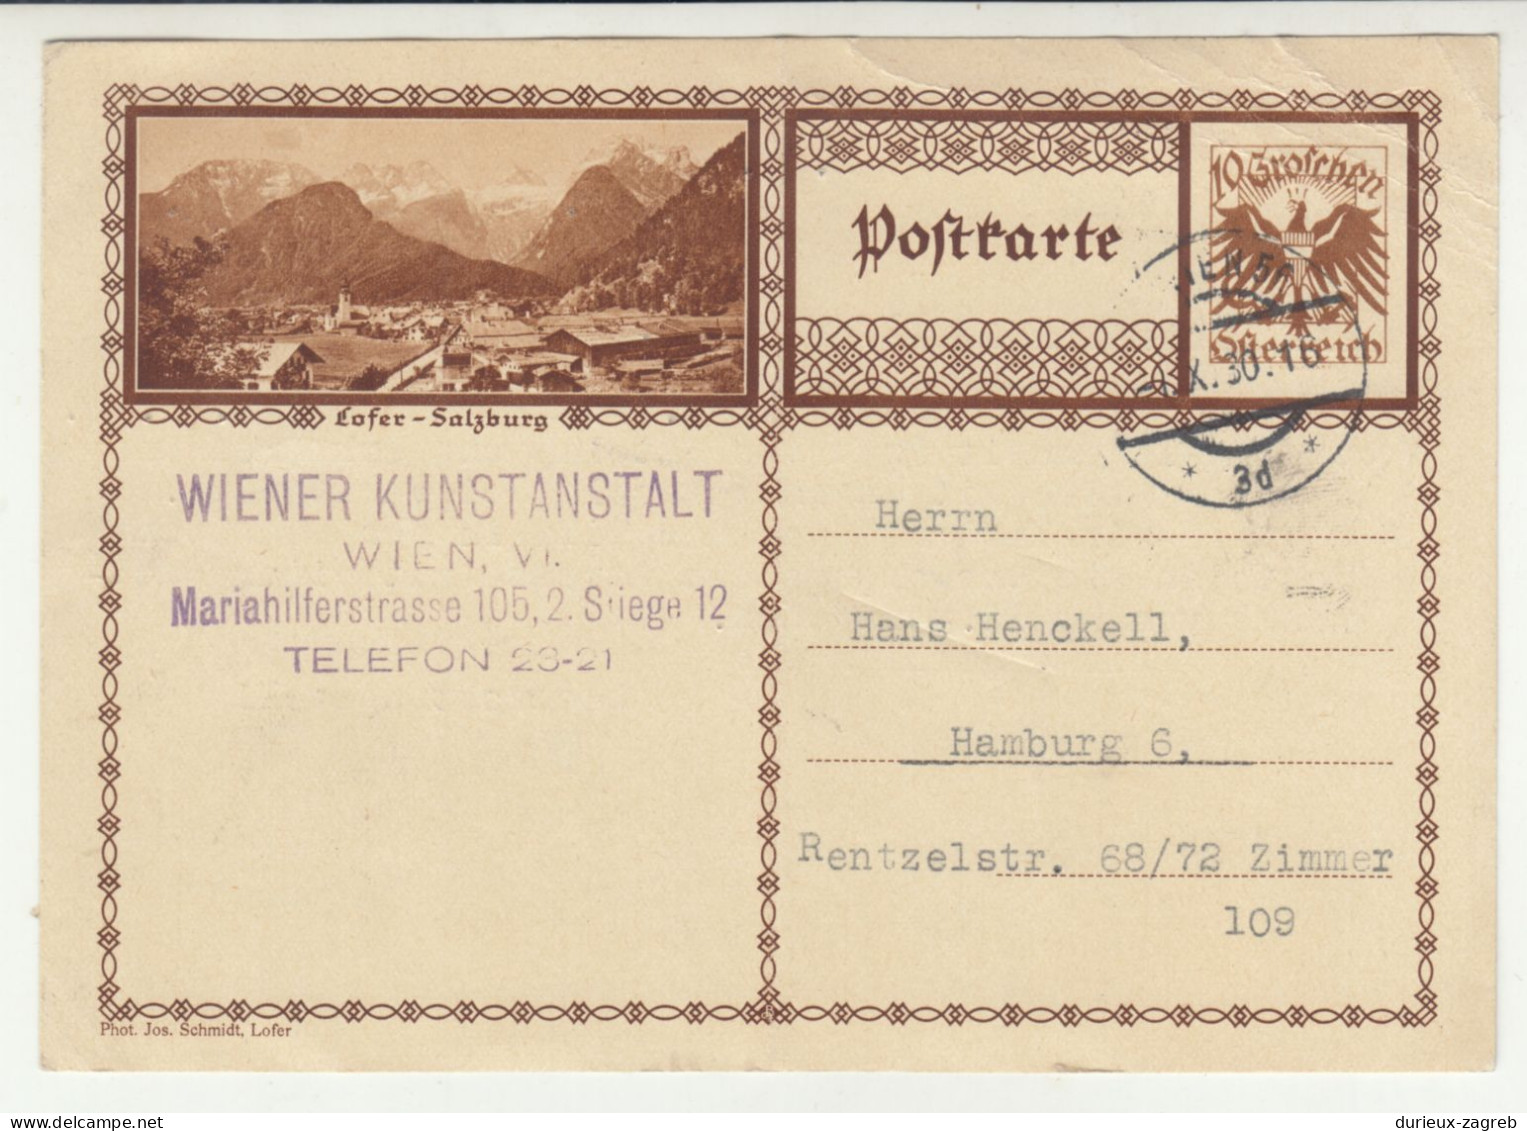 Lofer-Salzburg Illustrated Postal Stationery Postcard Posted 1930 B240503 - Briefkaarten